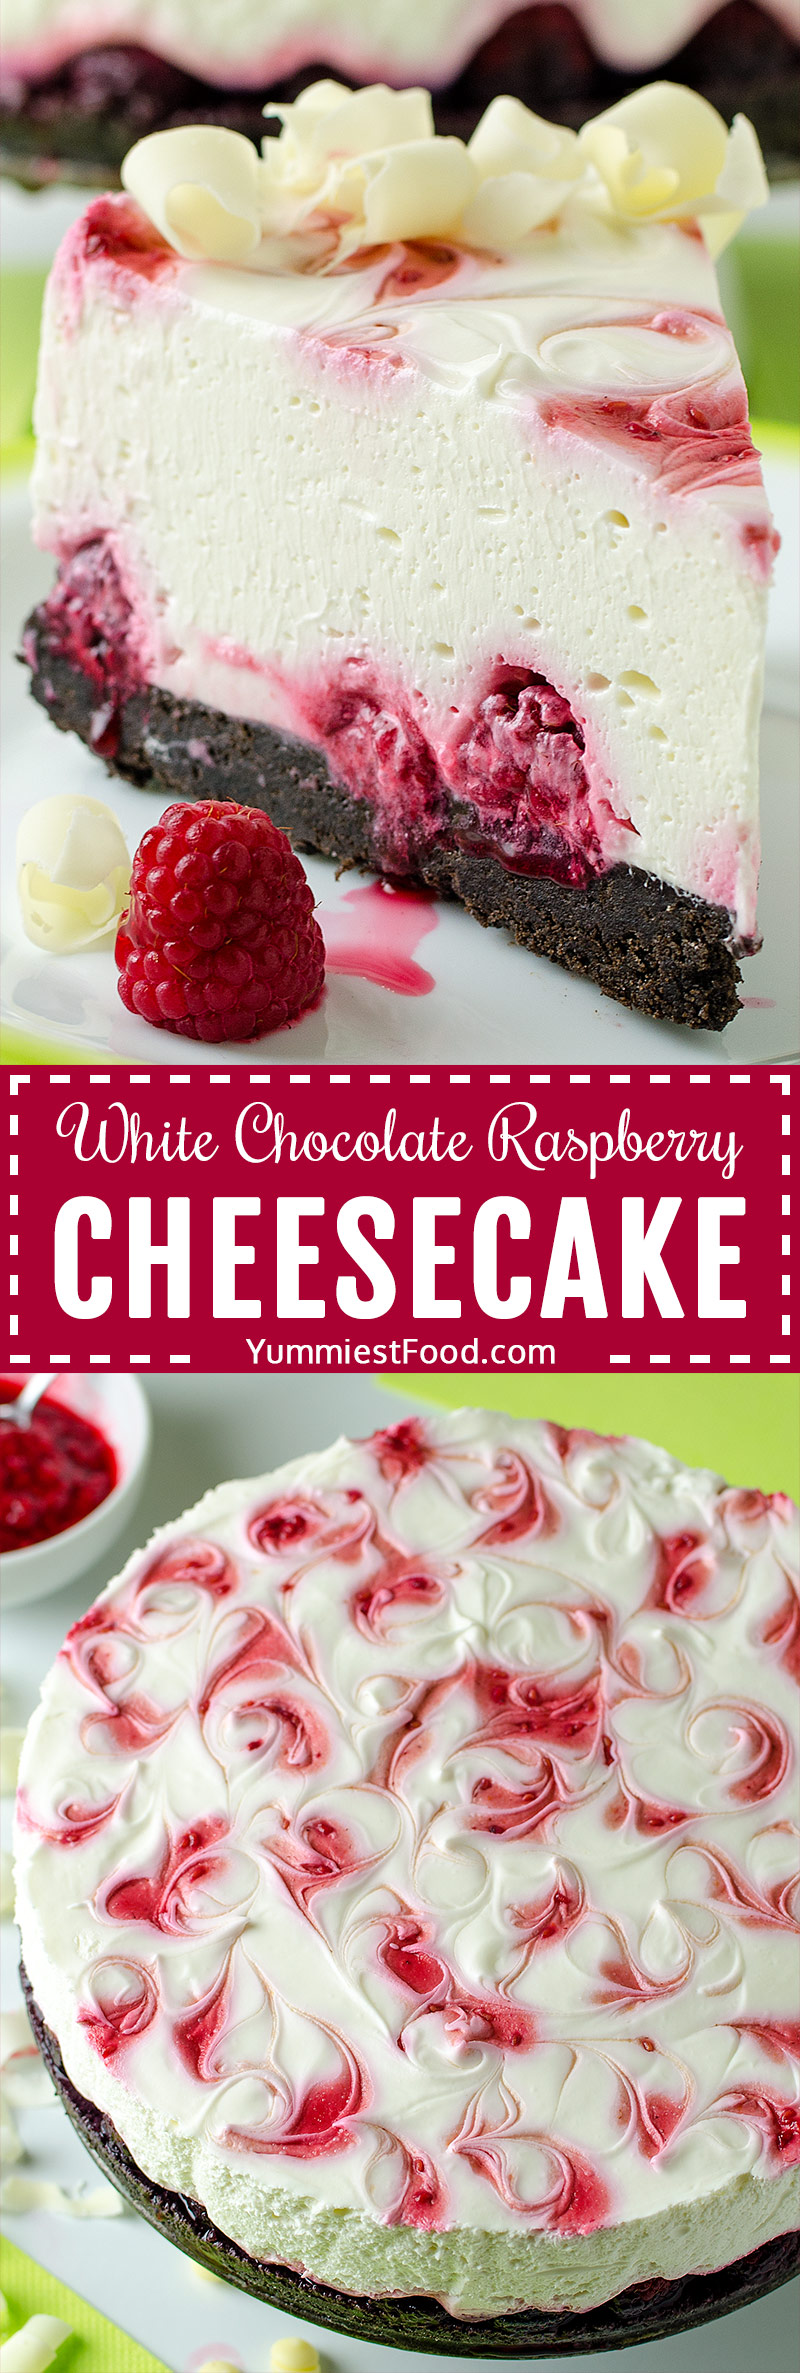 NO BAKE WHITE CHOCOLATE RASPBERRY CHEESECAKE – Creamy, smooth, rich cheesecake worthy of any occasion